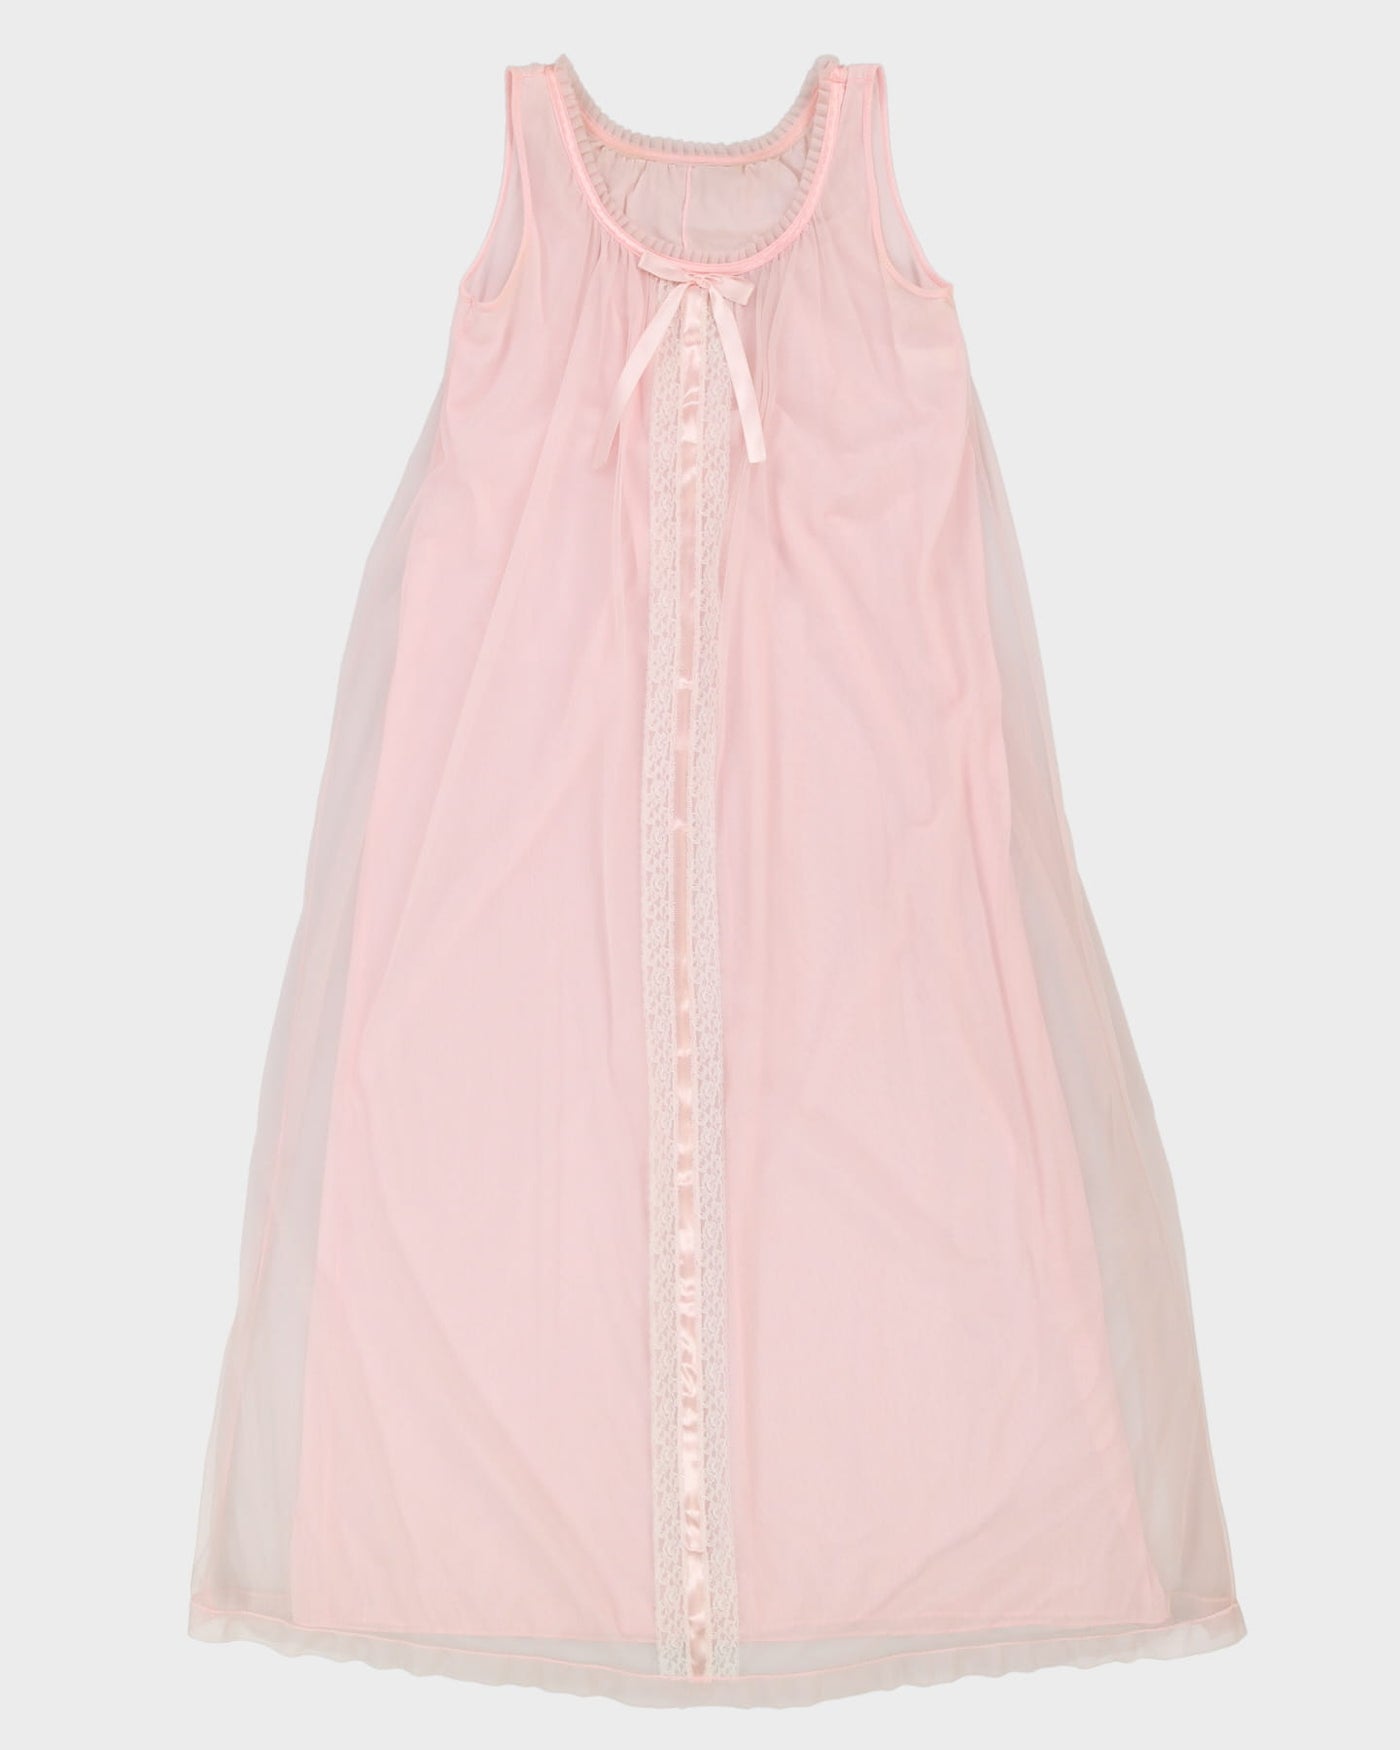 1960s pink layered slip dress - M